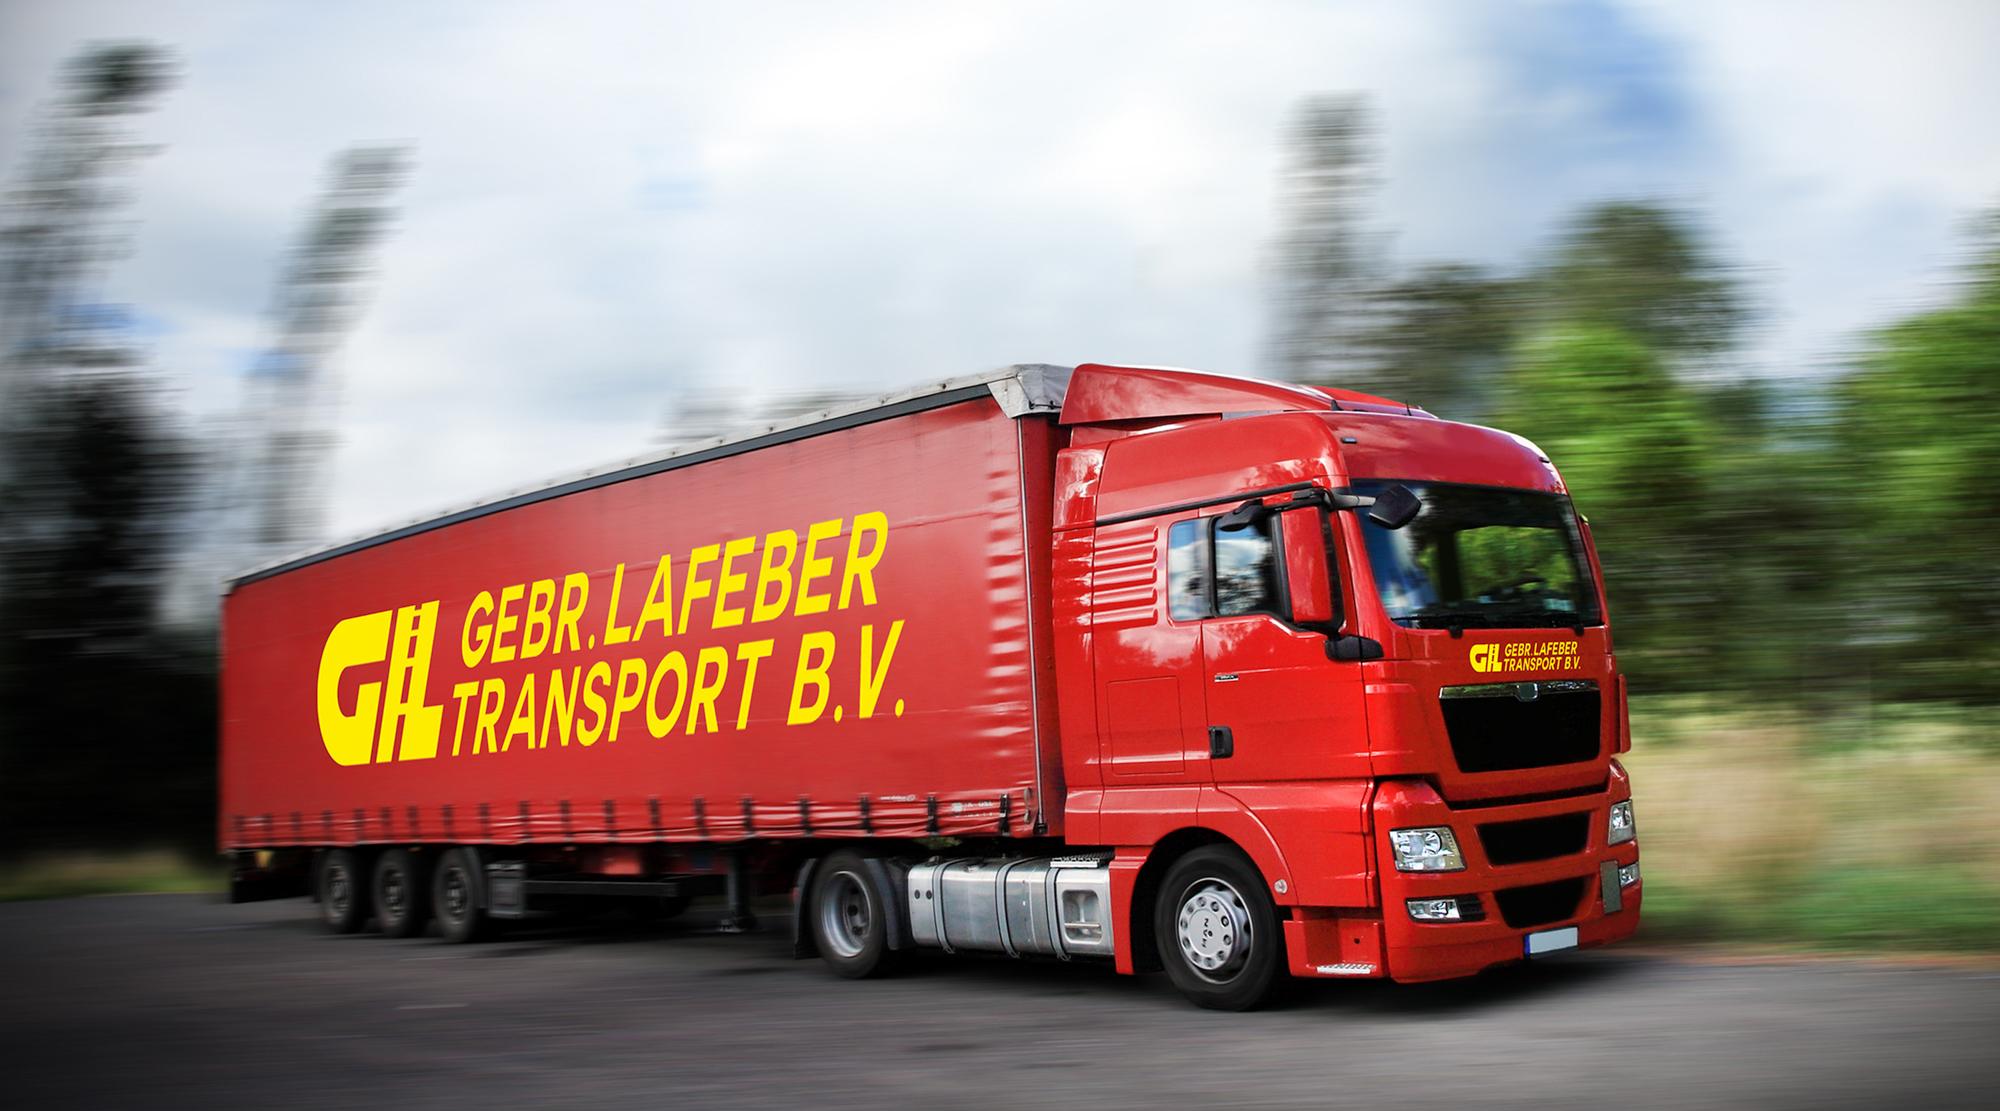 Gebroeders Lafeber - Speciaal transport